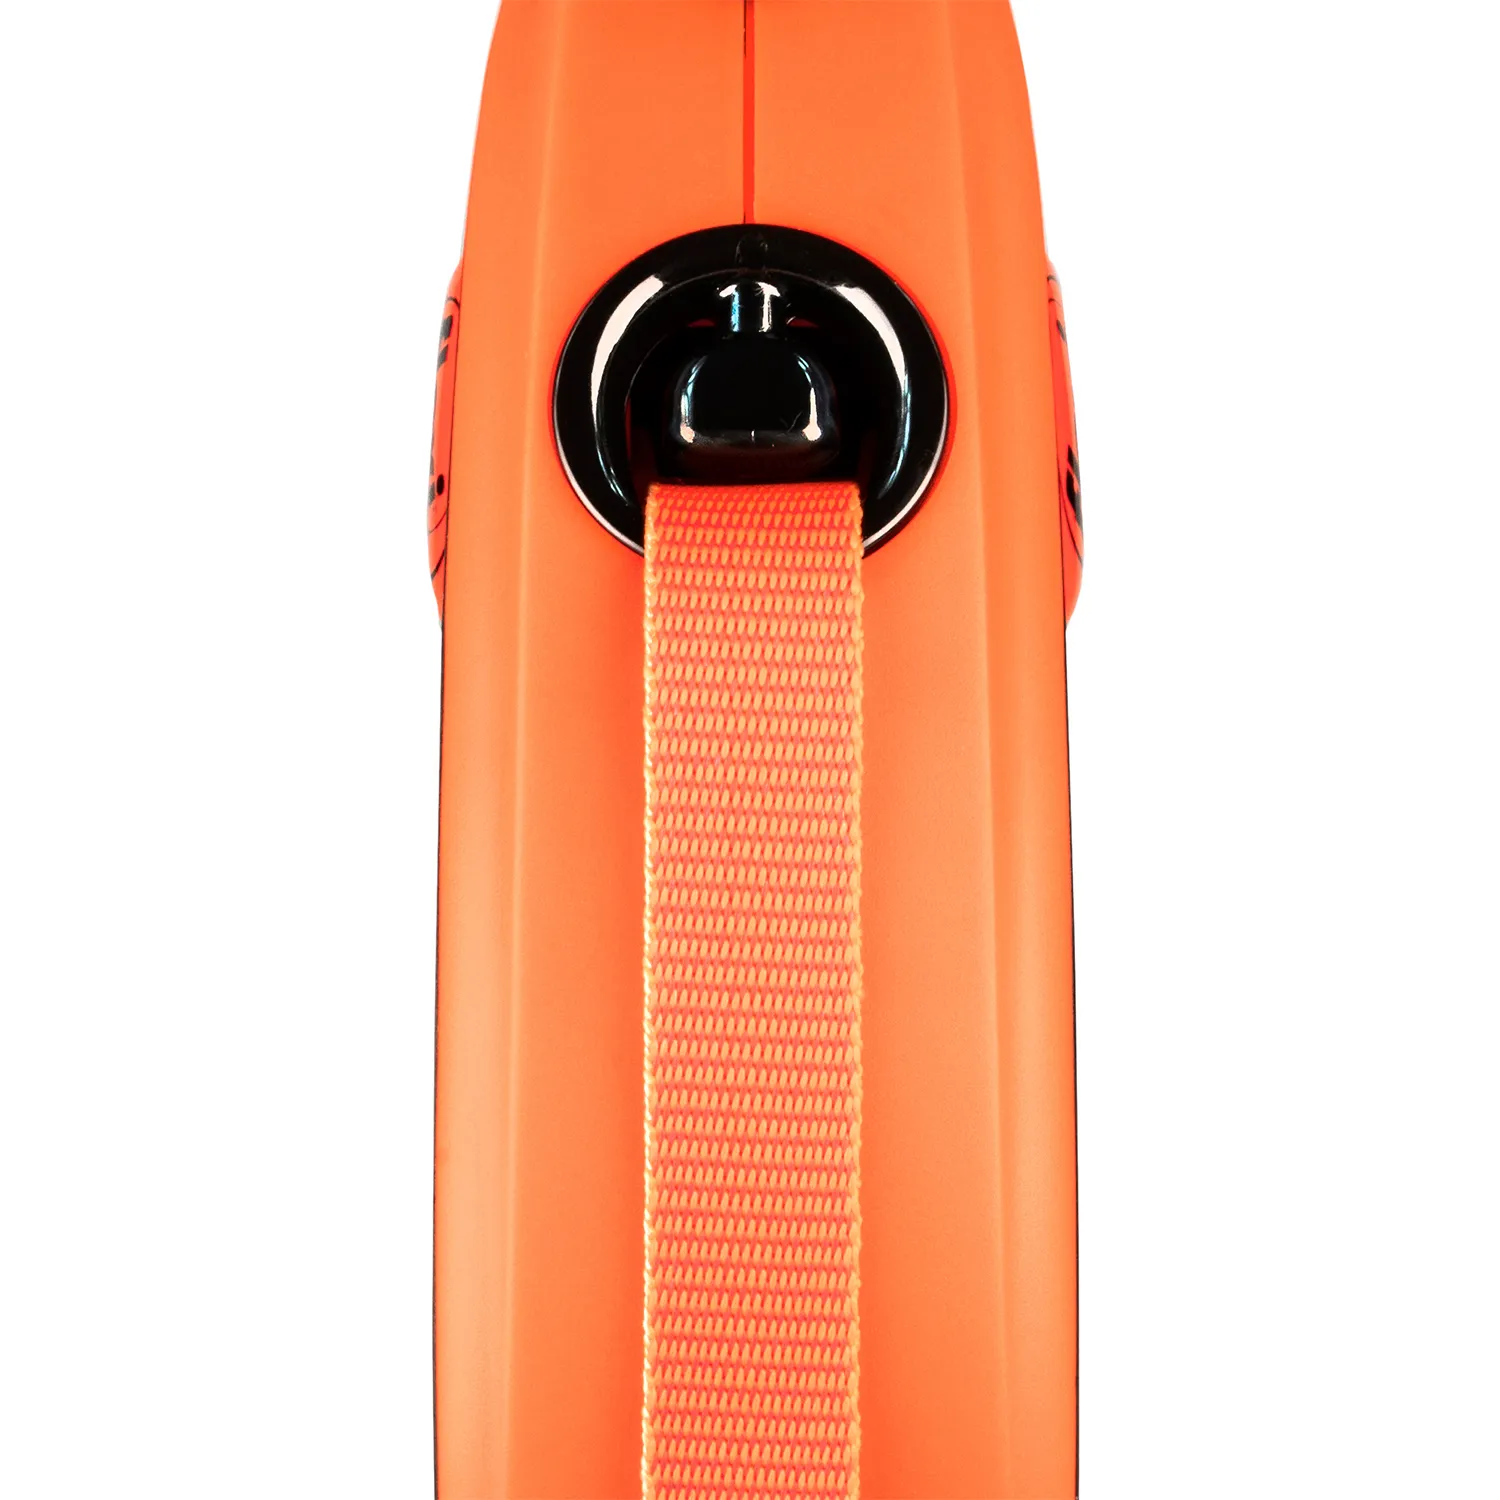 flexi рулетка Xtreme S (до 20 кг) 5 м лента оранжевая